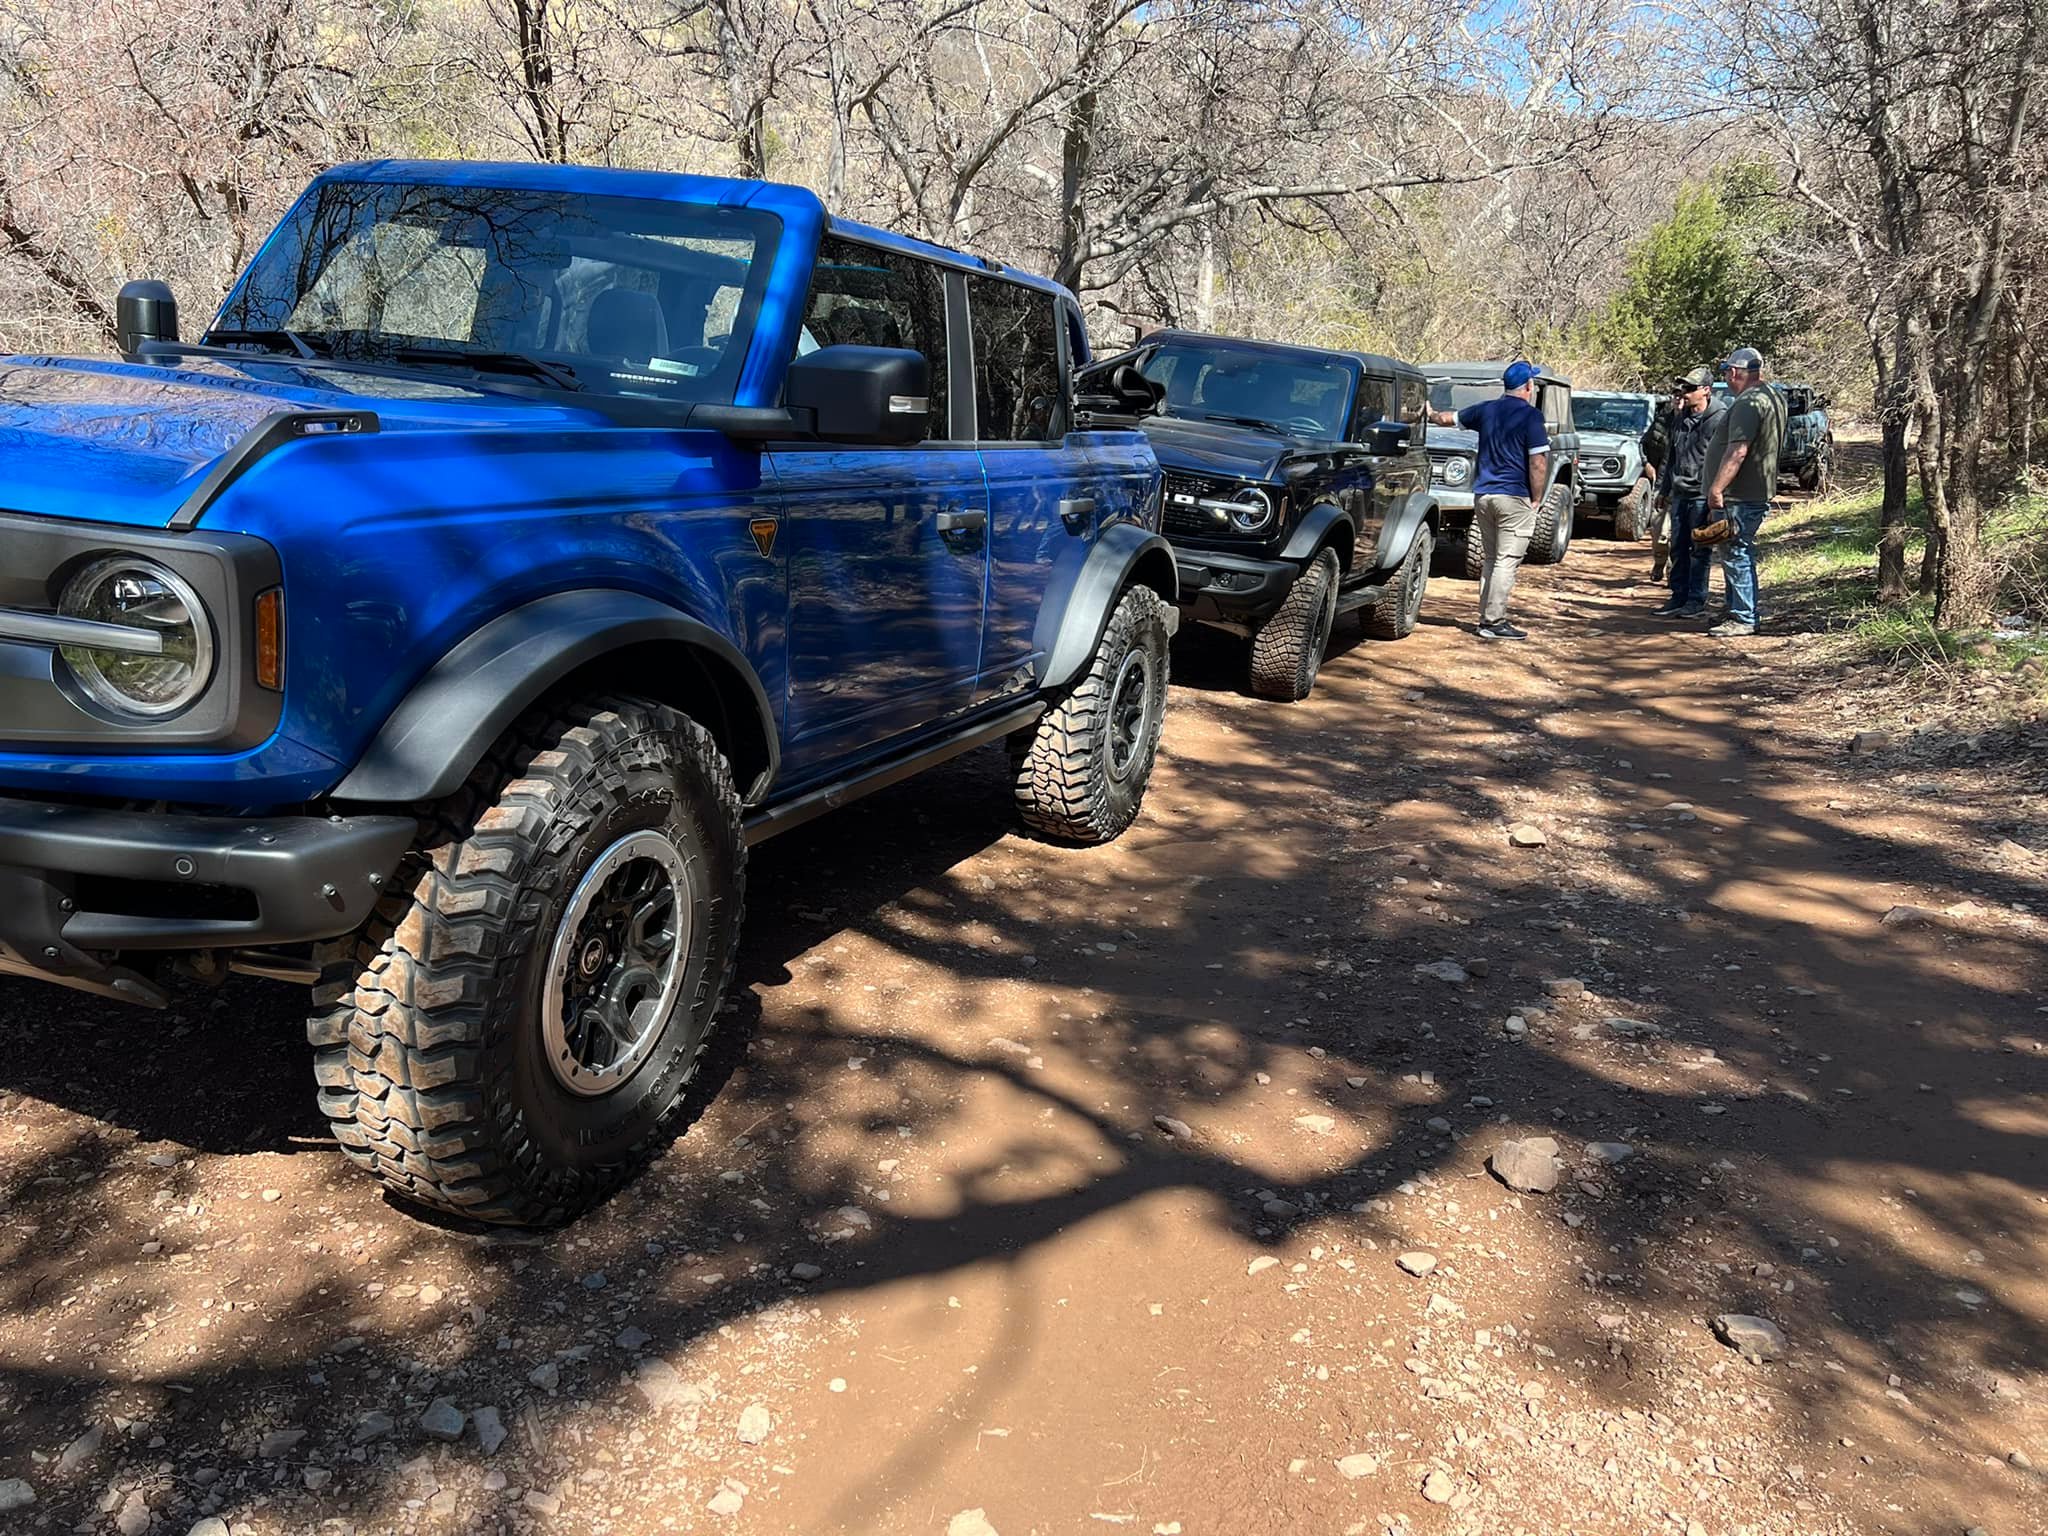 Ford Bronco Rockdawg84's Badsquach 21 Adventure and Build Thread "Wild Blue" WB Rice Peak 5